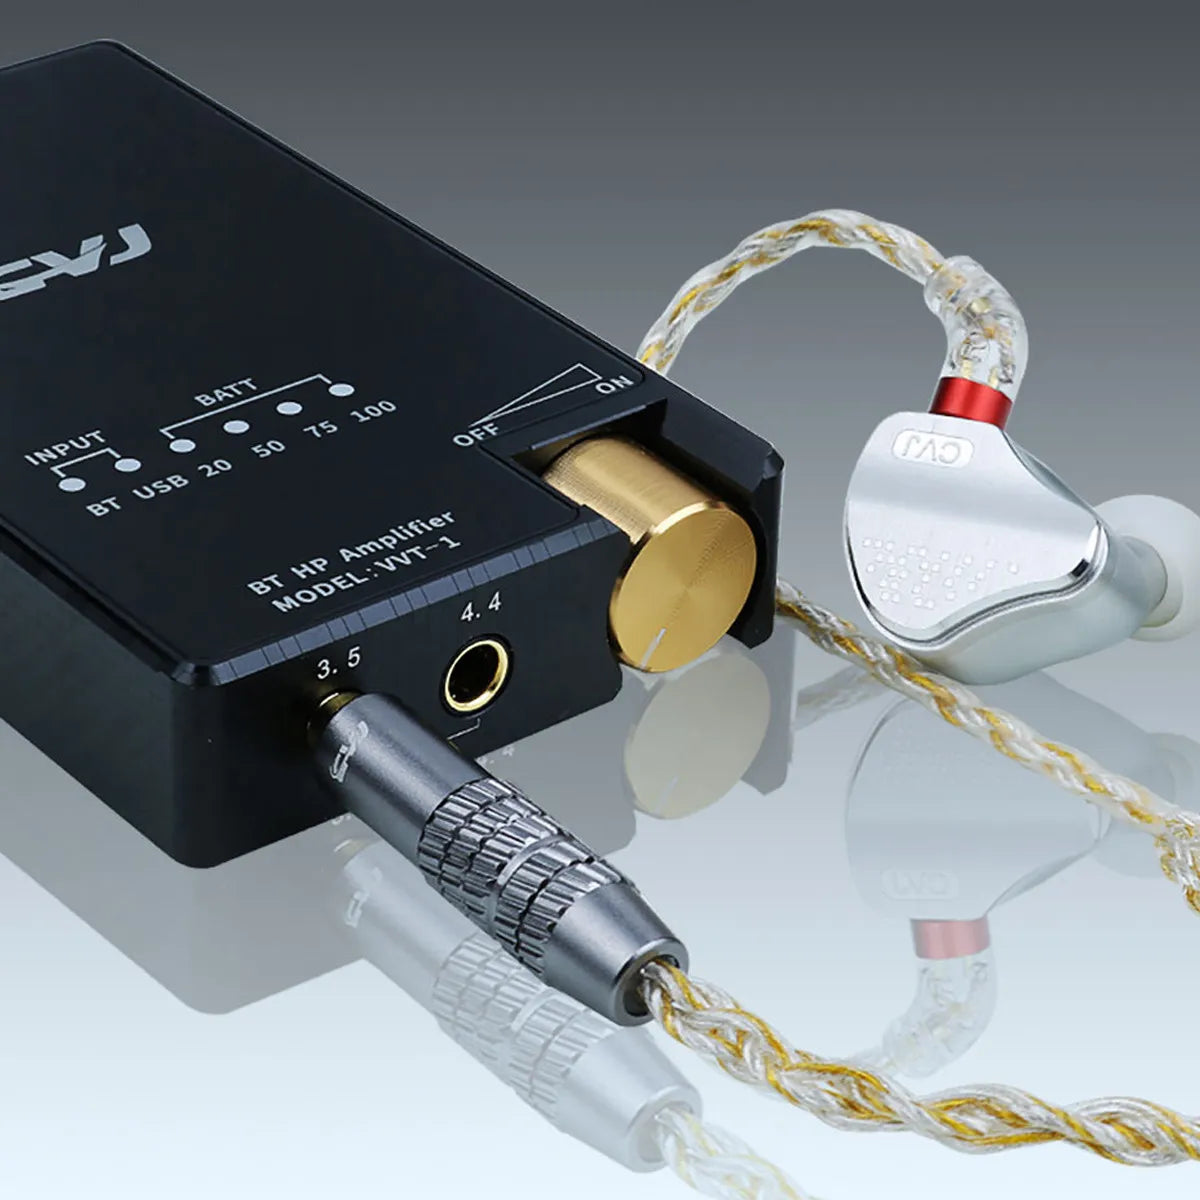 CVJ VVT-1 Portable BT Dual ESS9039Q2M  Dac and Headphone Amplifier - The HiFi Cat